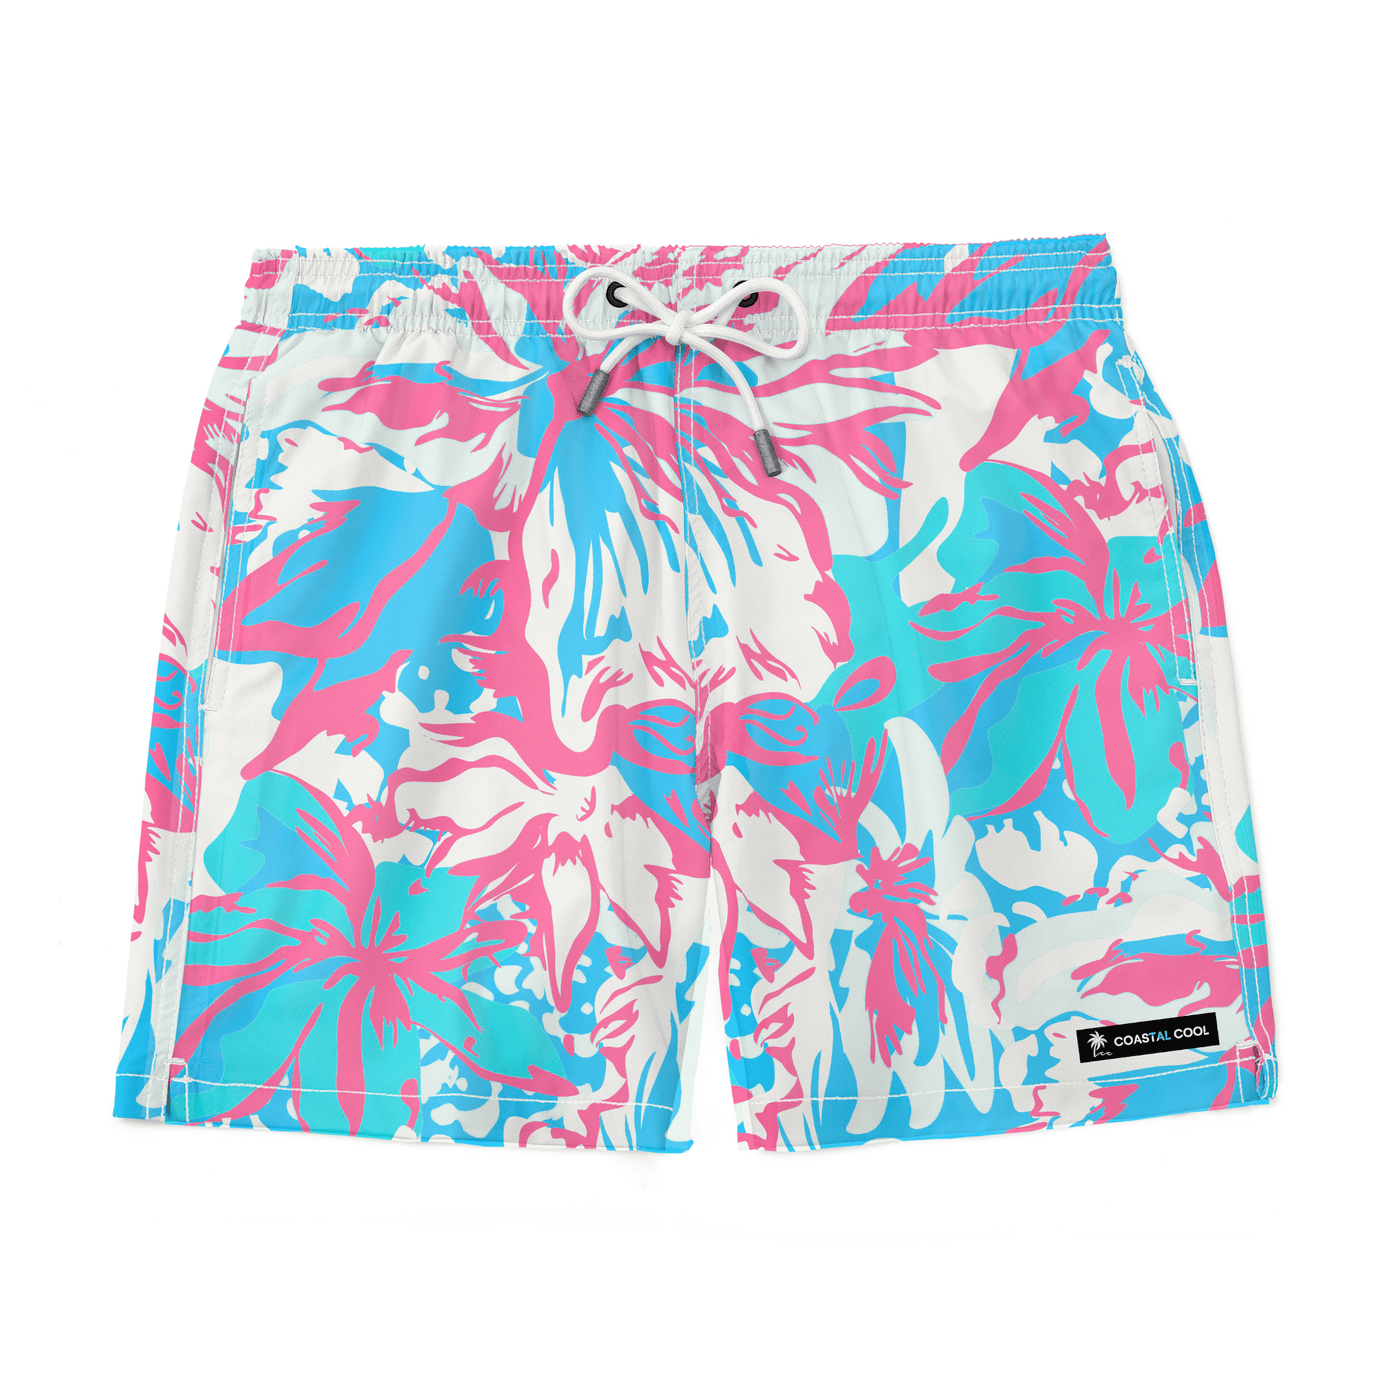 Bora Bora Pink Swim Trunks - Coastal Cool - Swimwear and Beachwear - Recycled fabrics